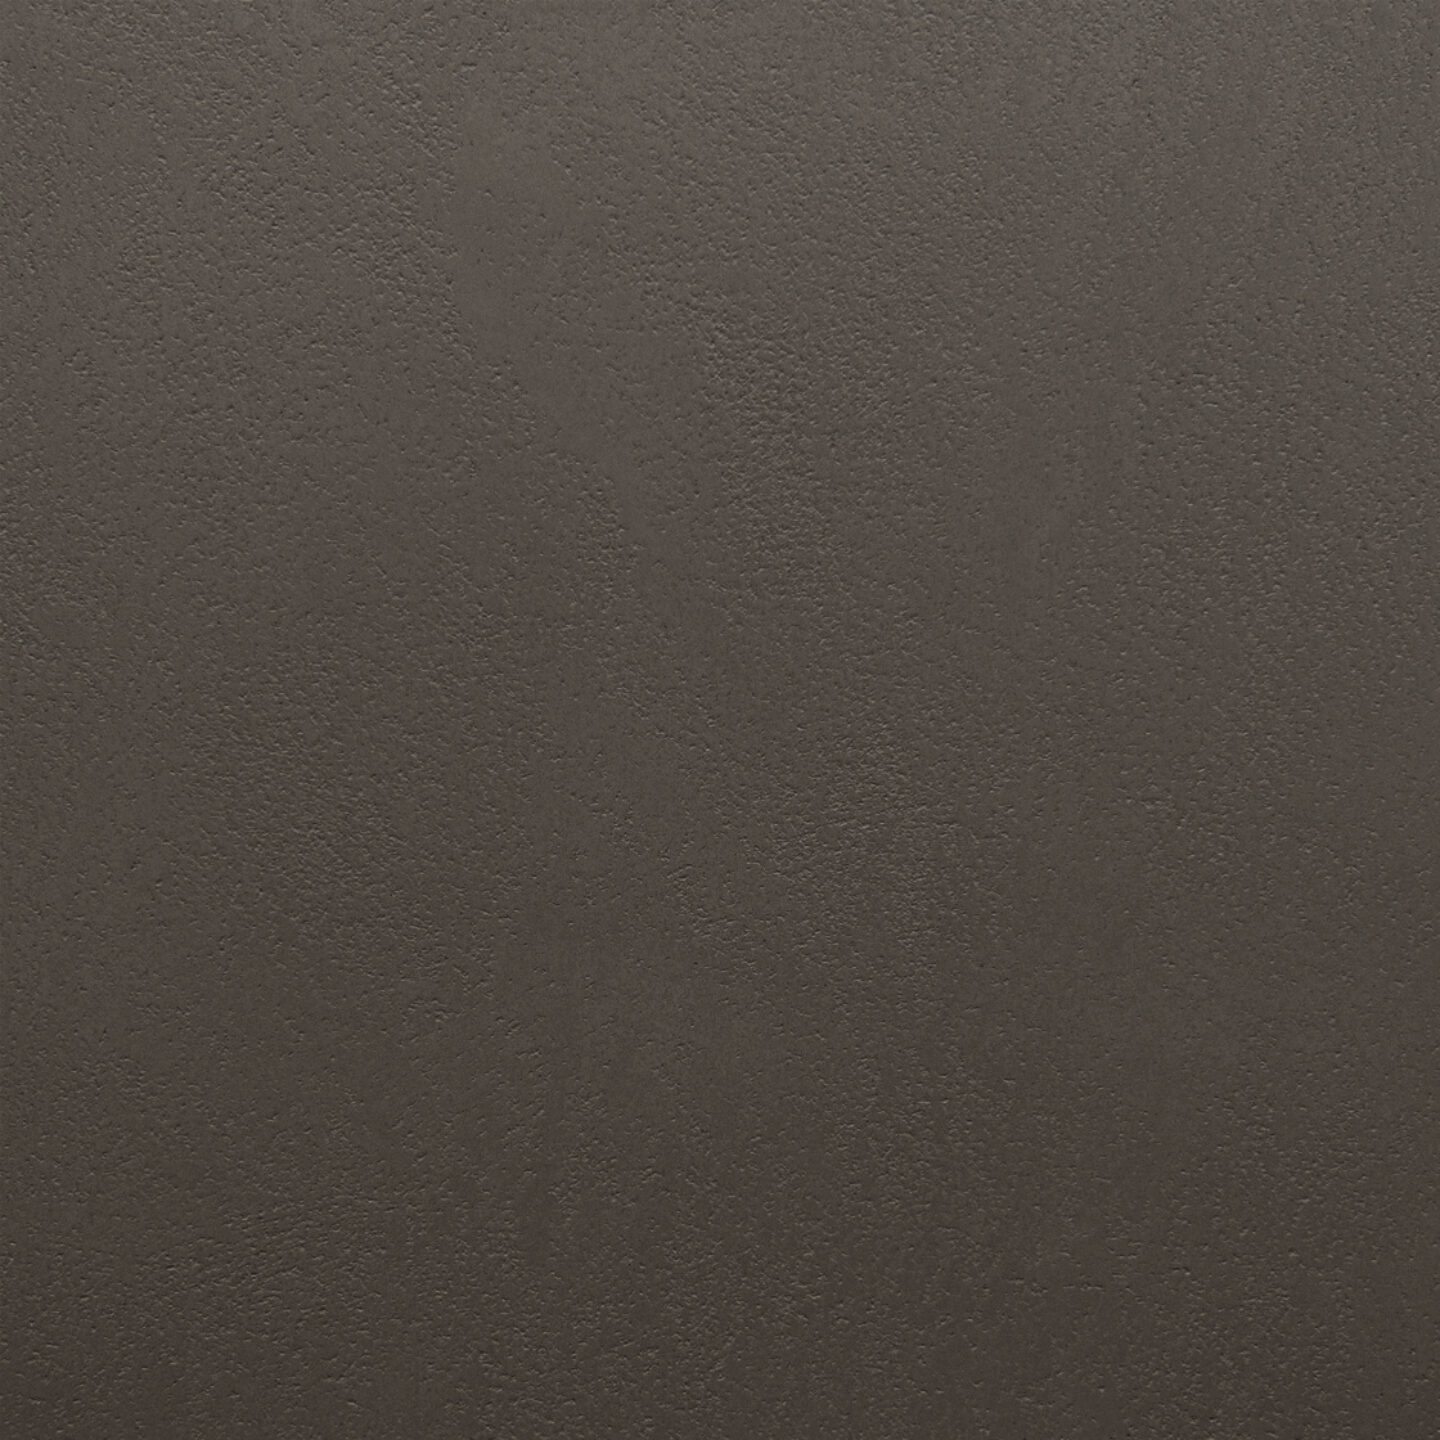 Close up of Armourcoat leatherstone exterior polished plaster finish - 39